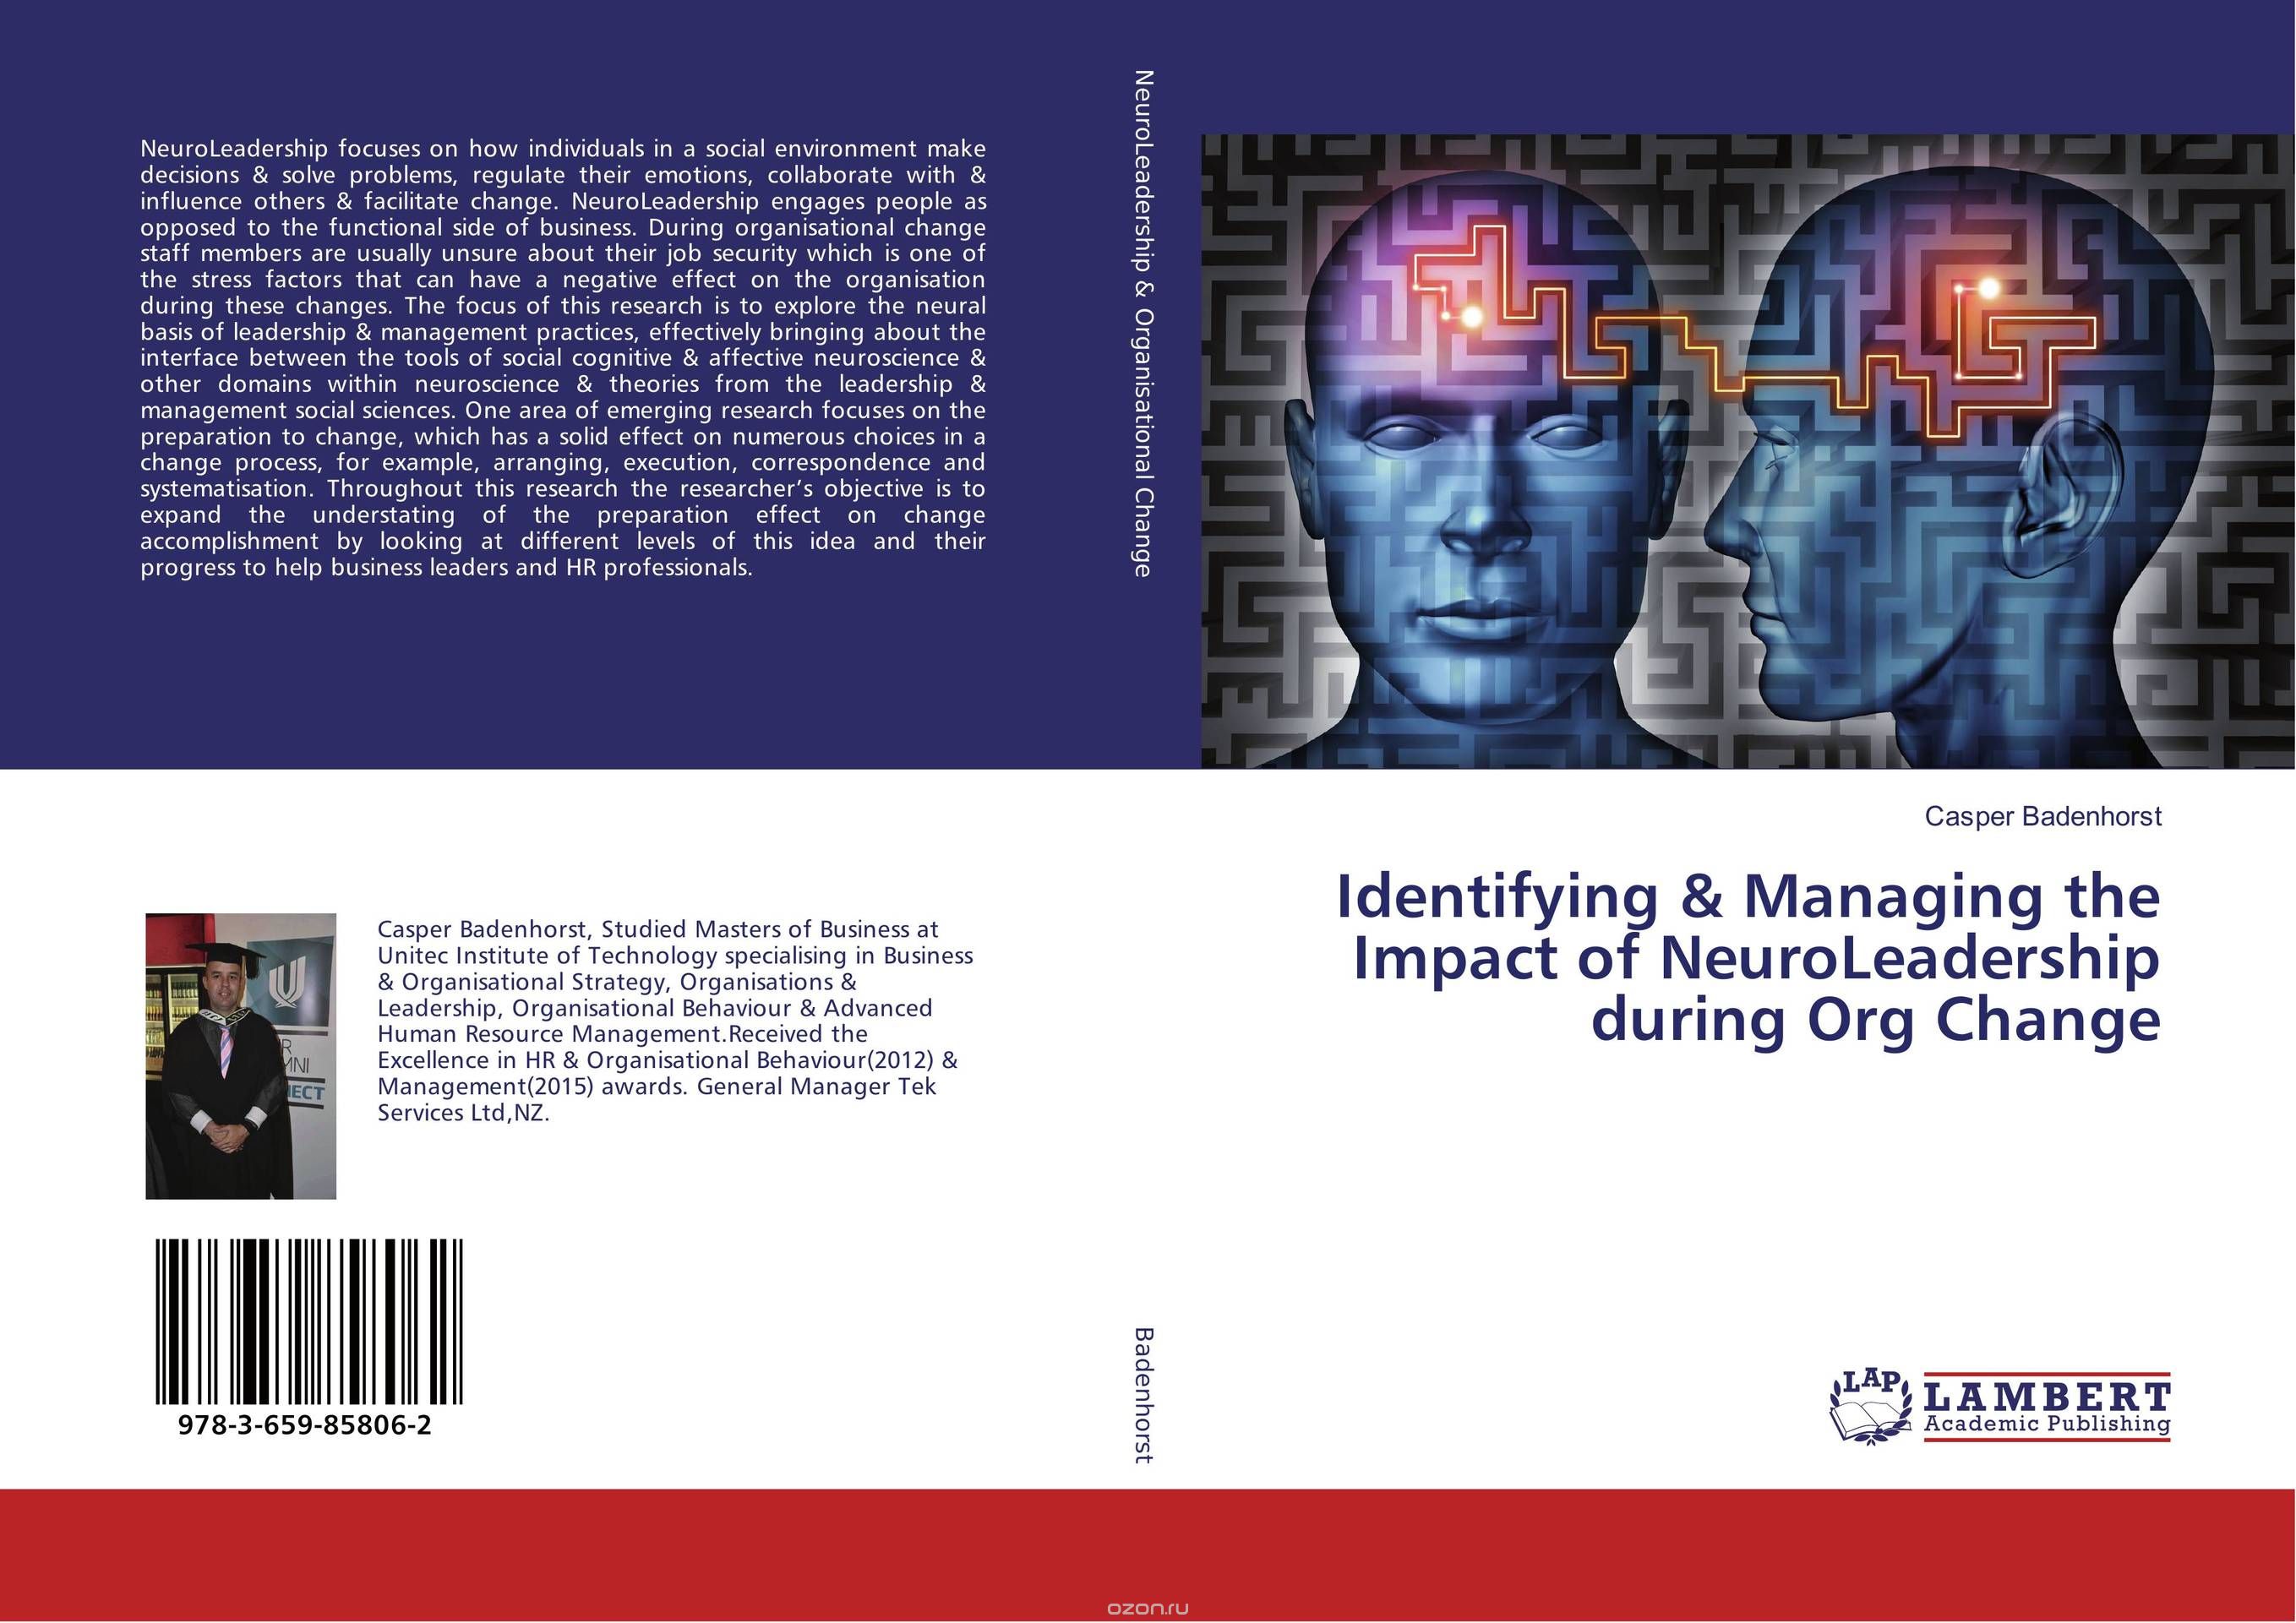 Identifying & Managing the Impact of NeuroLeadership during Org Change